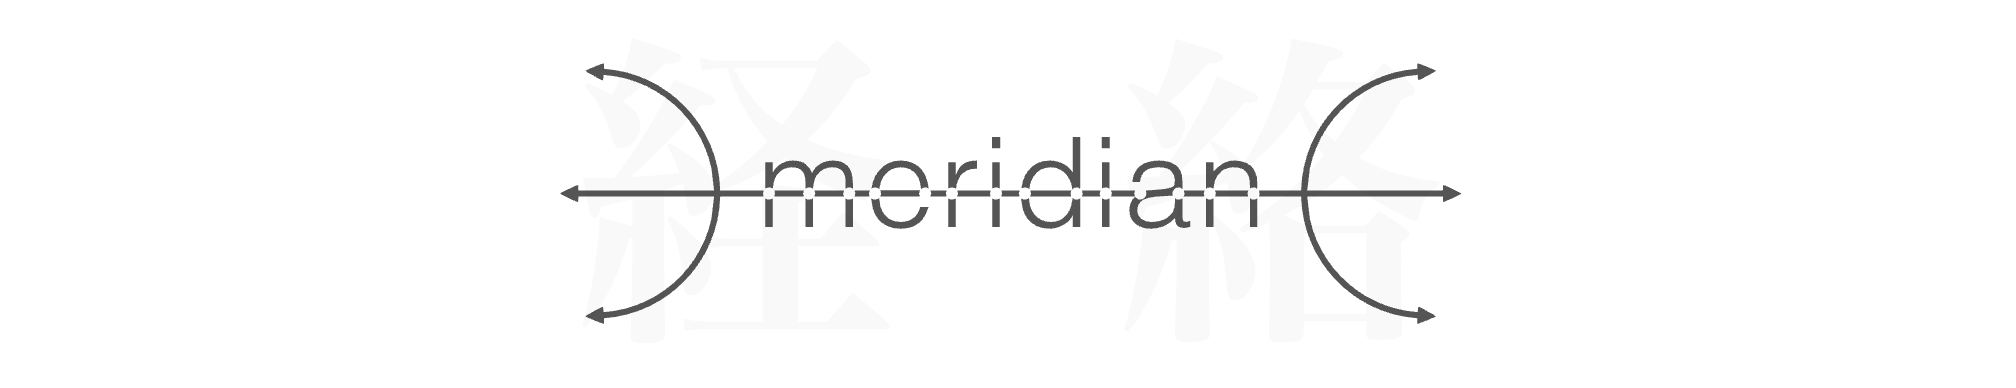 meridian_logo